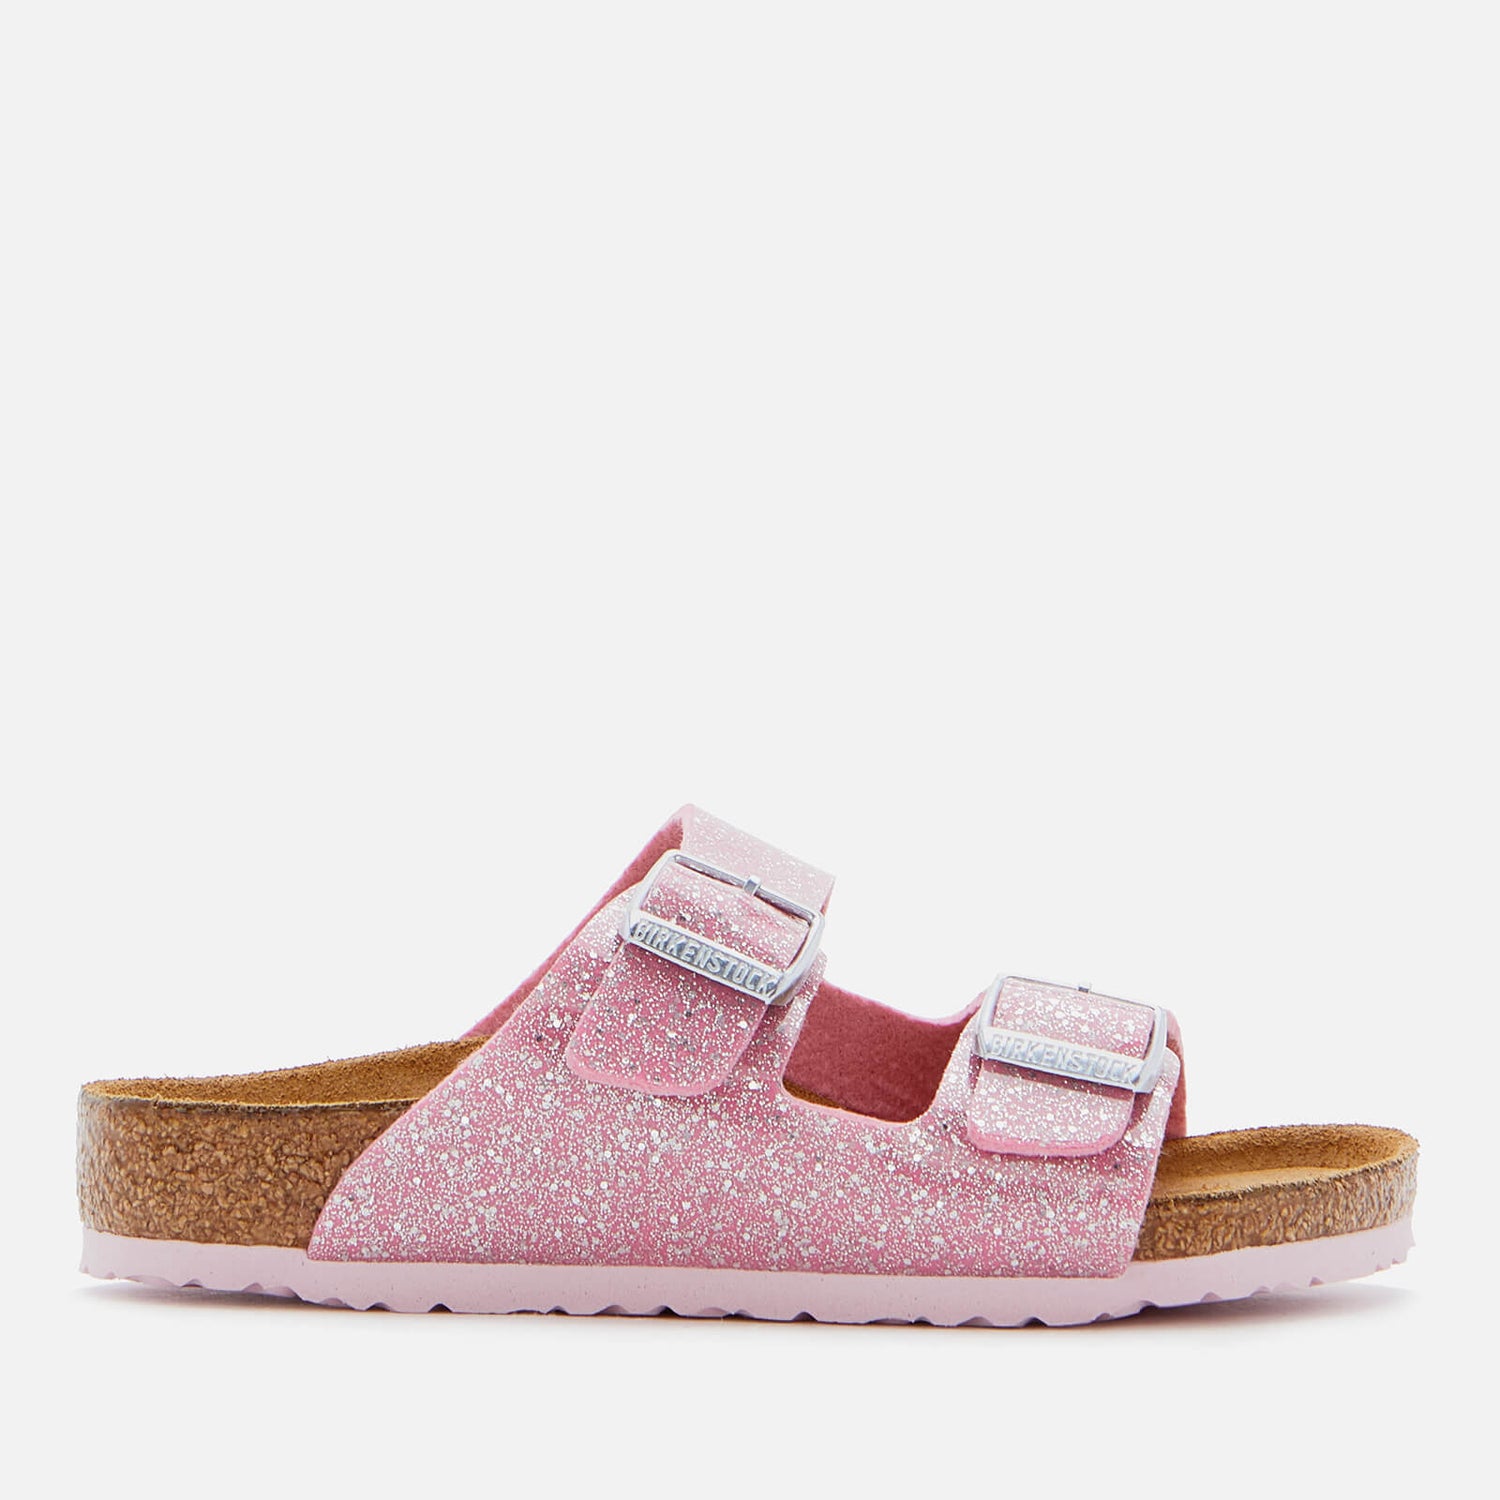 Birkenstock Arizona Cosmic Sparkle Sandals - Cosmic Sparkle Candy Pink